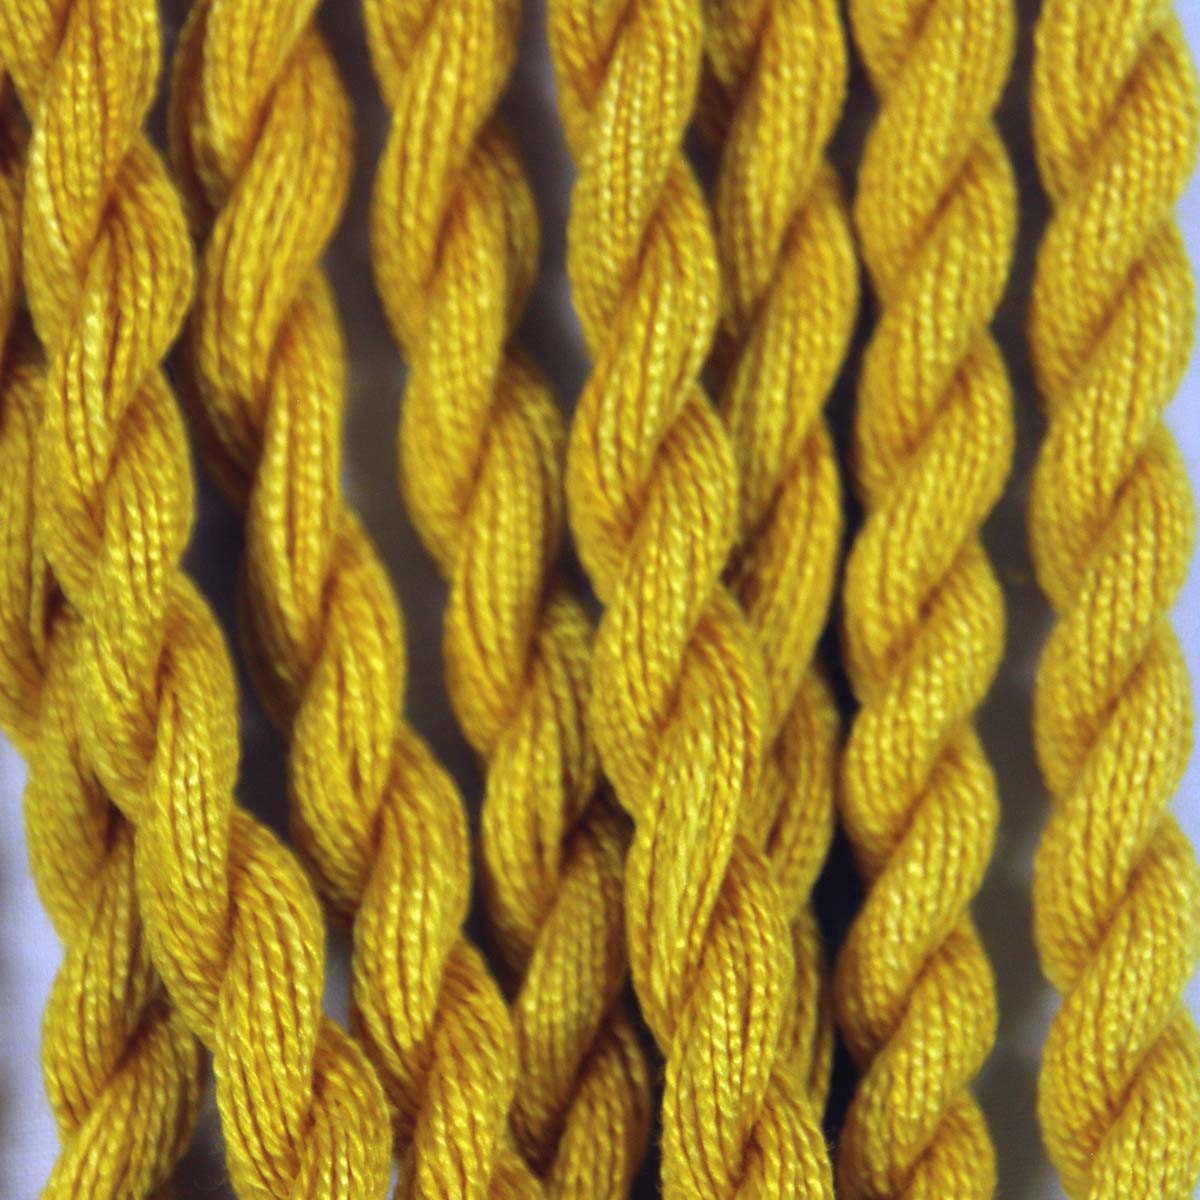 www.colourstreams.com.au Colour Streams Hand Dyed Cotton Threads Cotto Strands Slow Stitch Embroidery Textile Arts Fibre DL 53 Noosa Sands Golds Yellows